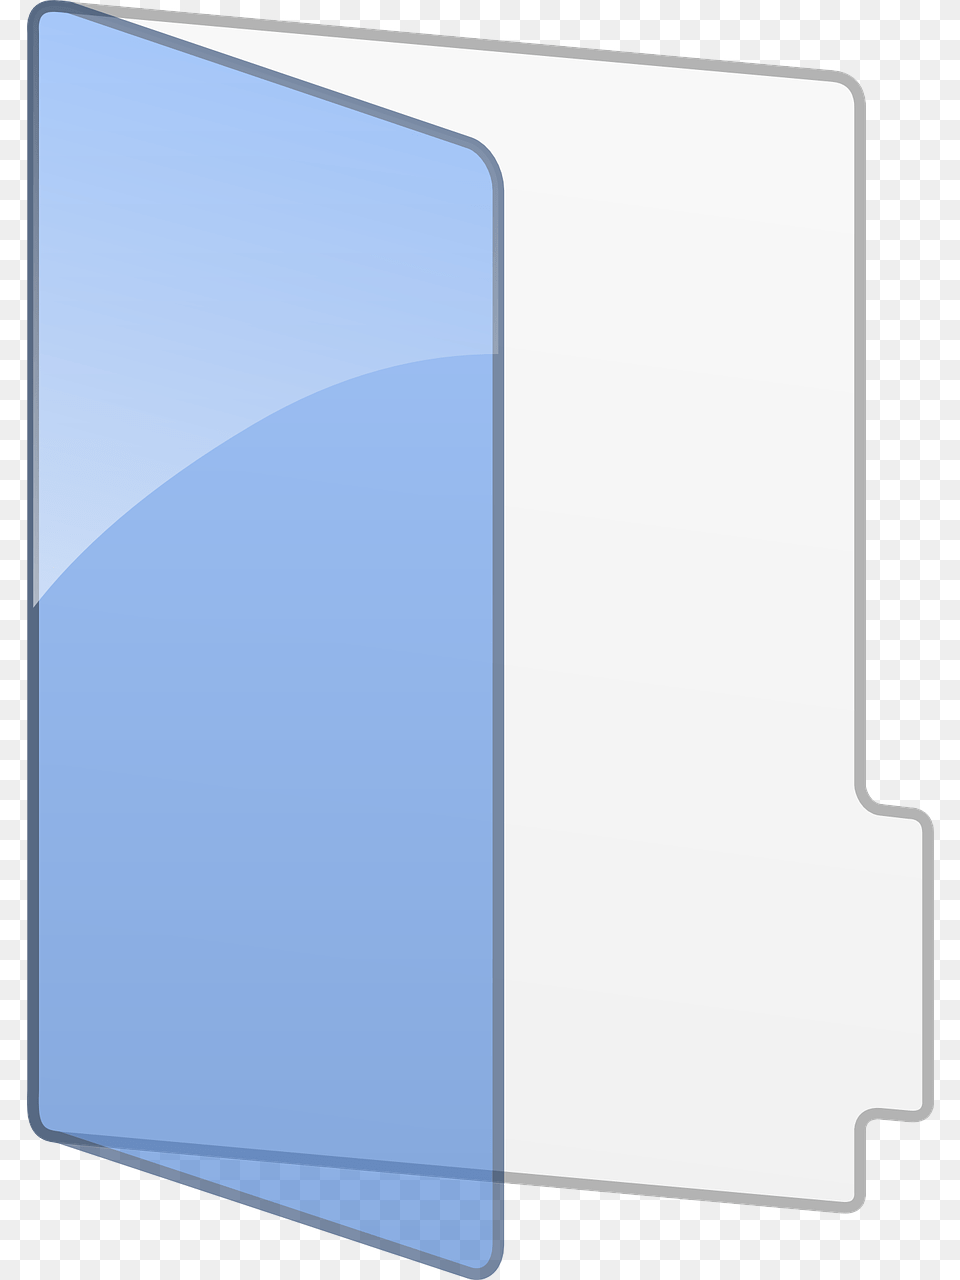 Free Vector Folder Icon Folder Icon Blue Sky, File Binder, File Folder, File, White Board Png Image